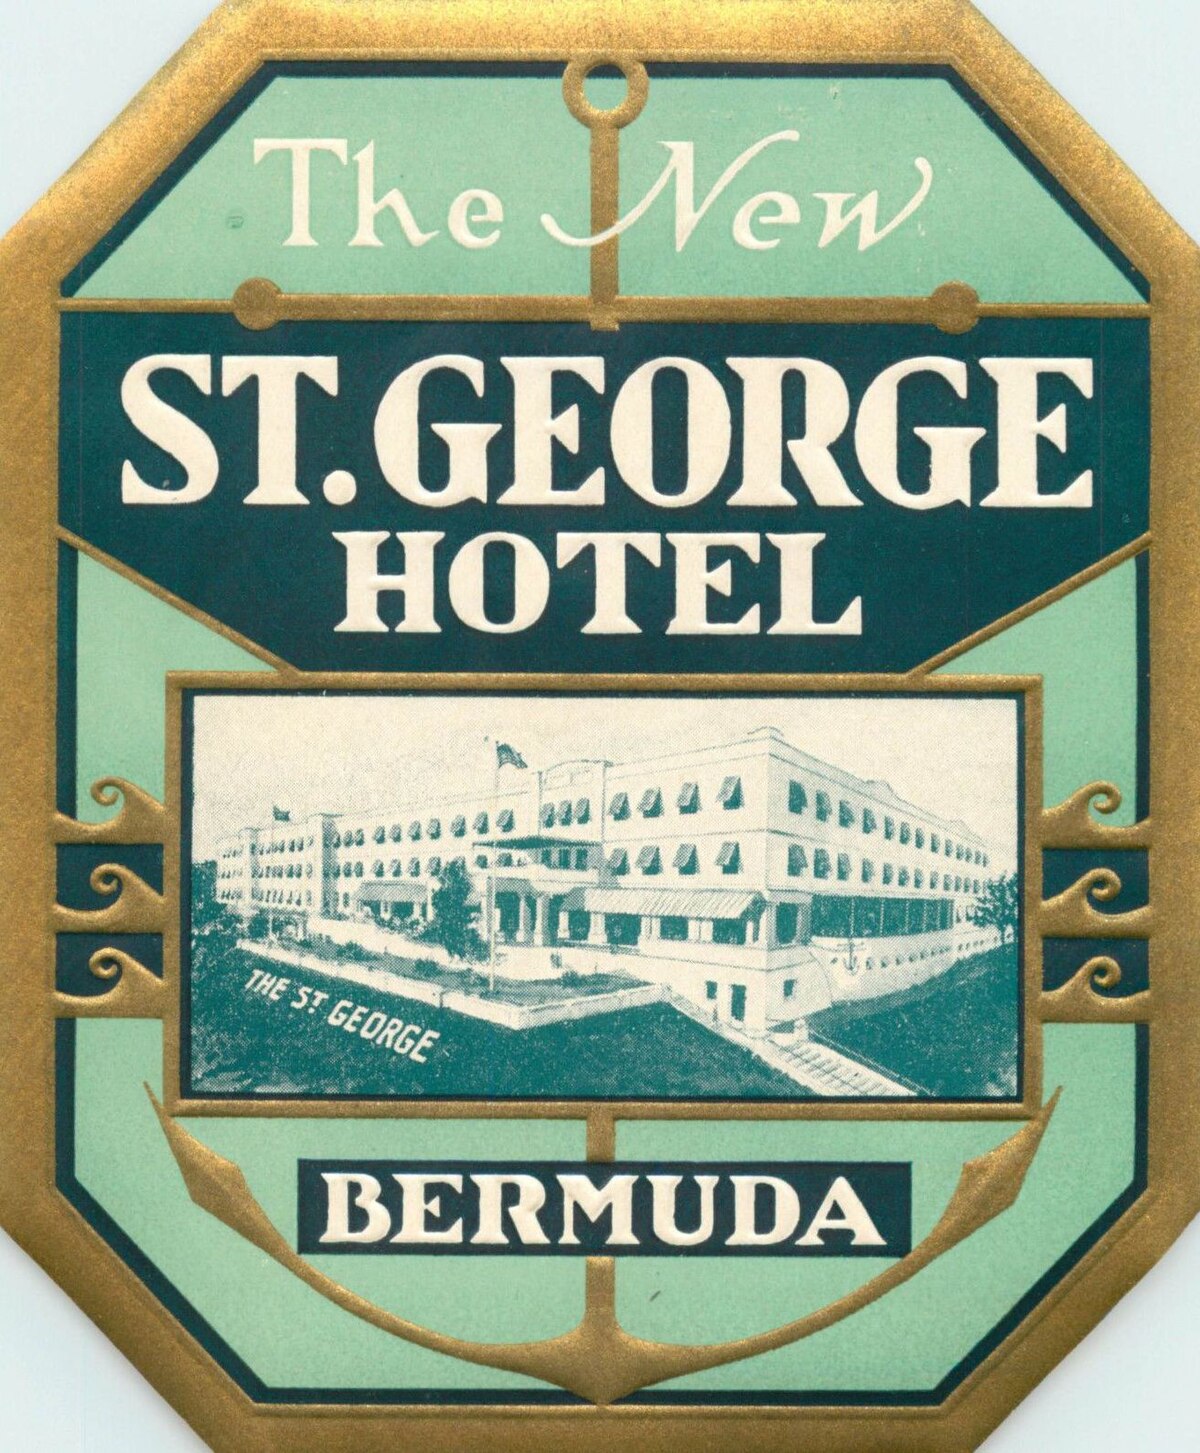 The St. George Hotel (Bermuda) - Wikipedia